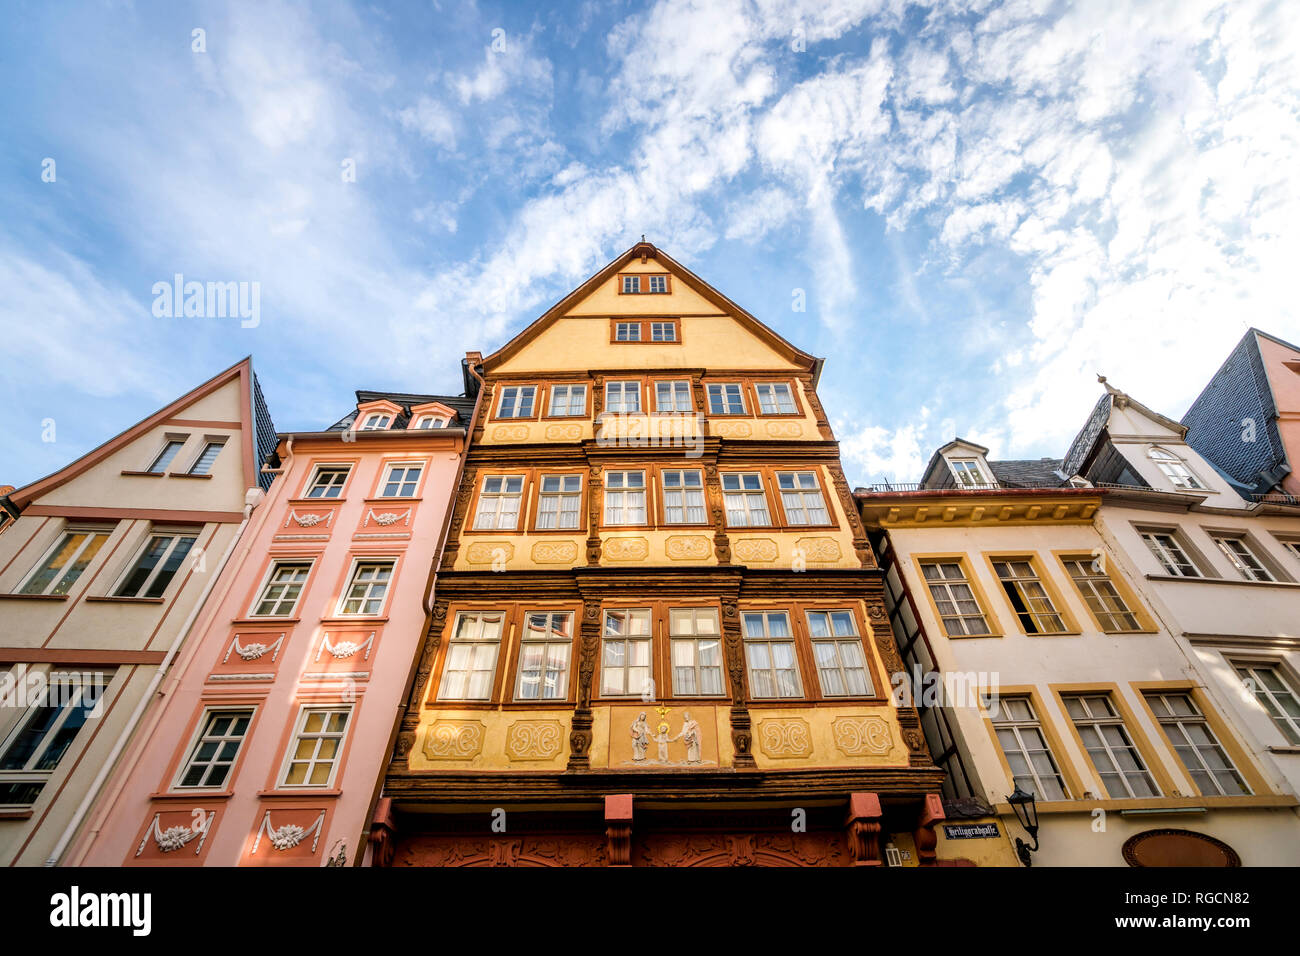 Germany, Rhineland-Palatinate, Mainz, Old town, half-timbered houses Stock Photo